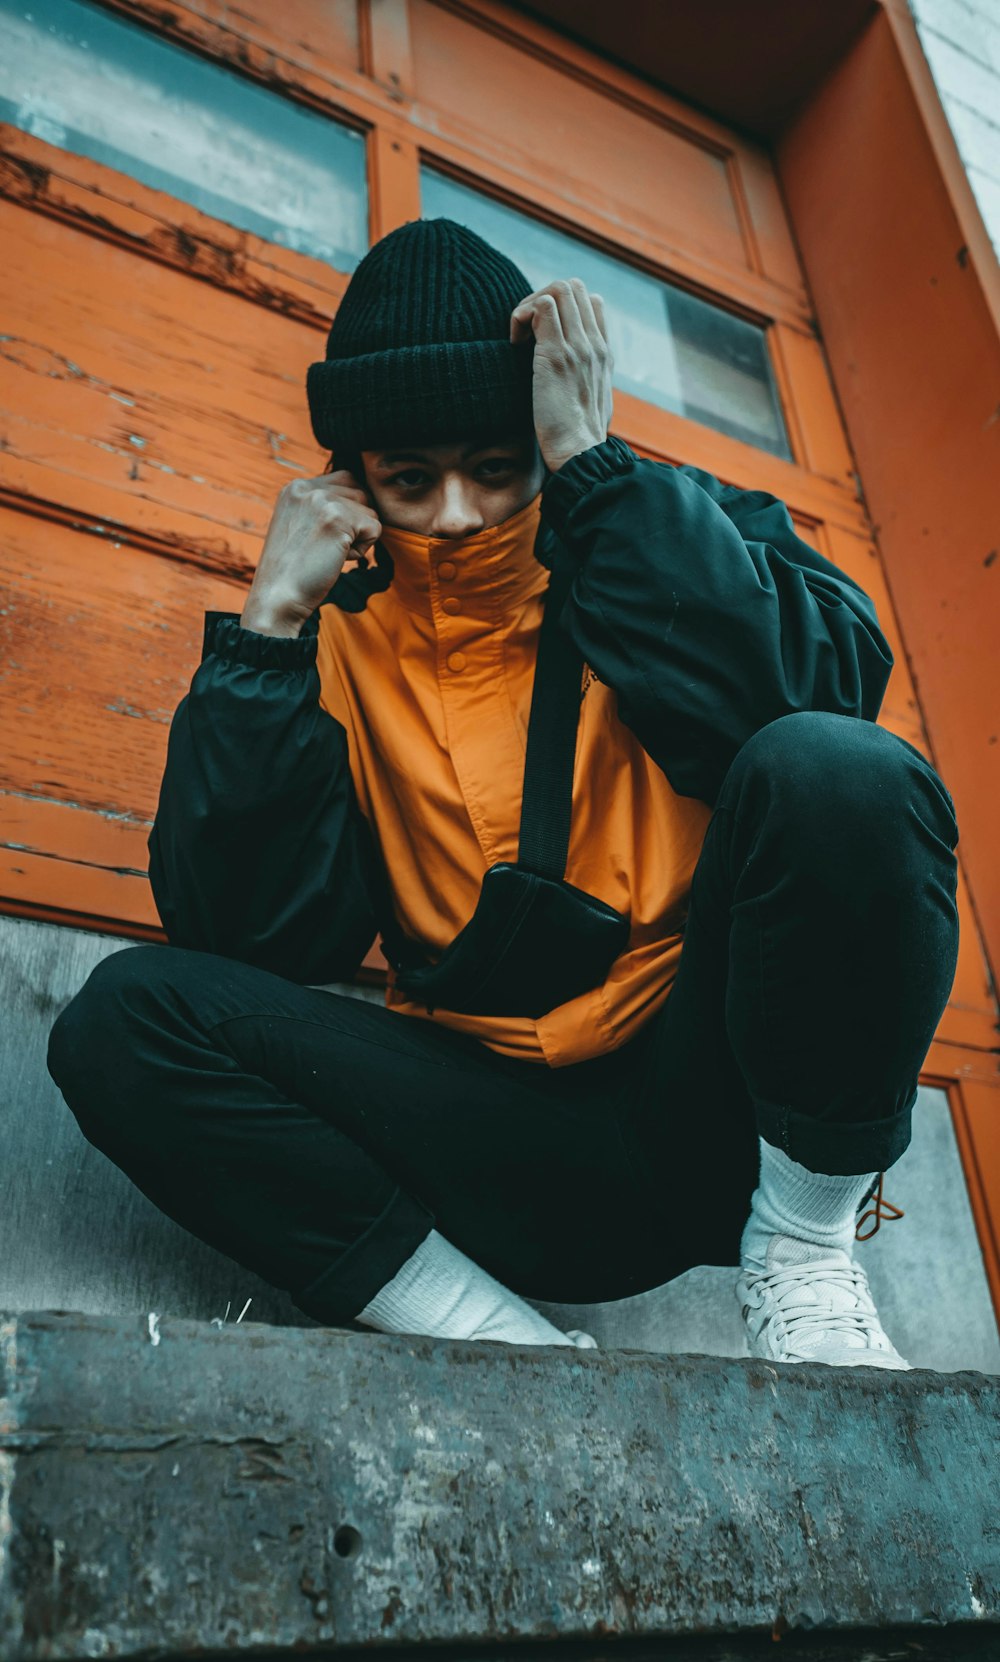 crouching man wearing orange and gray jacket beside wall